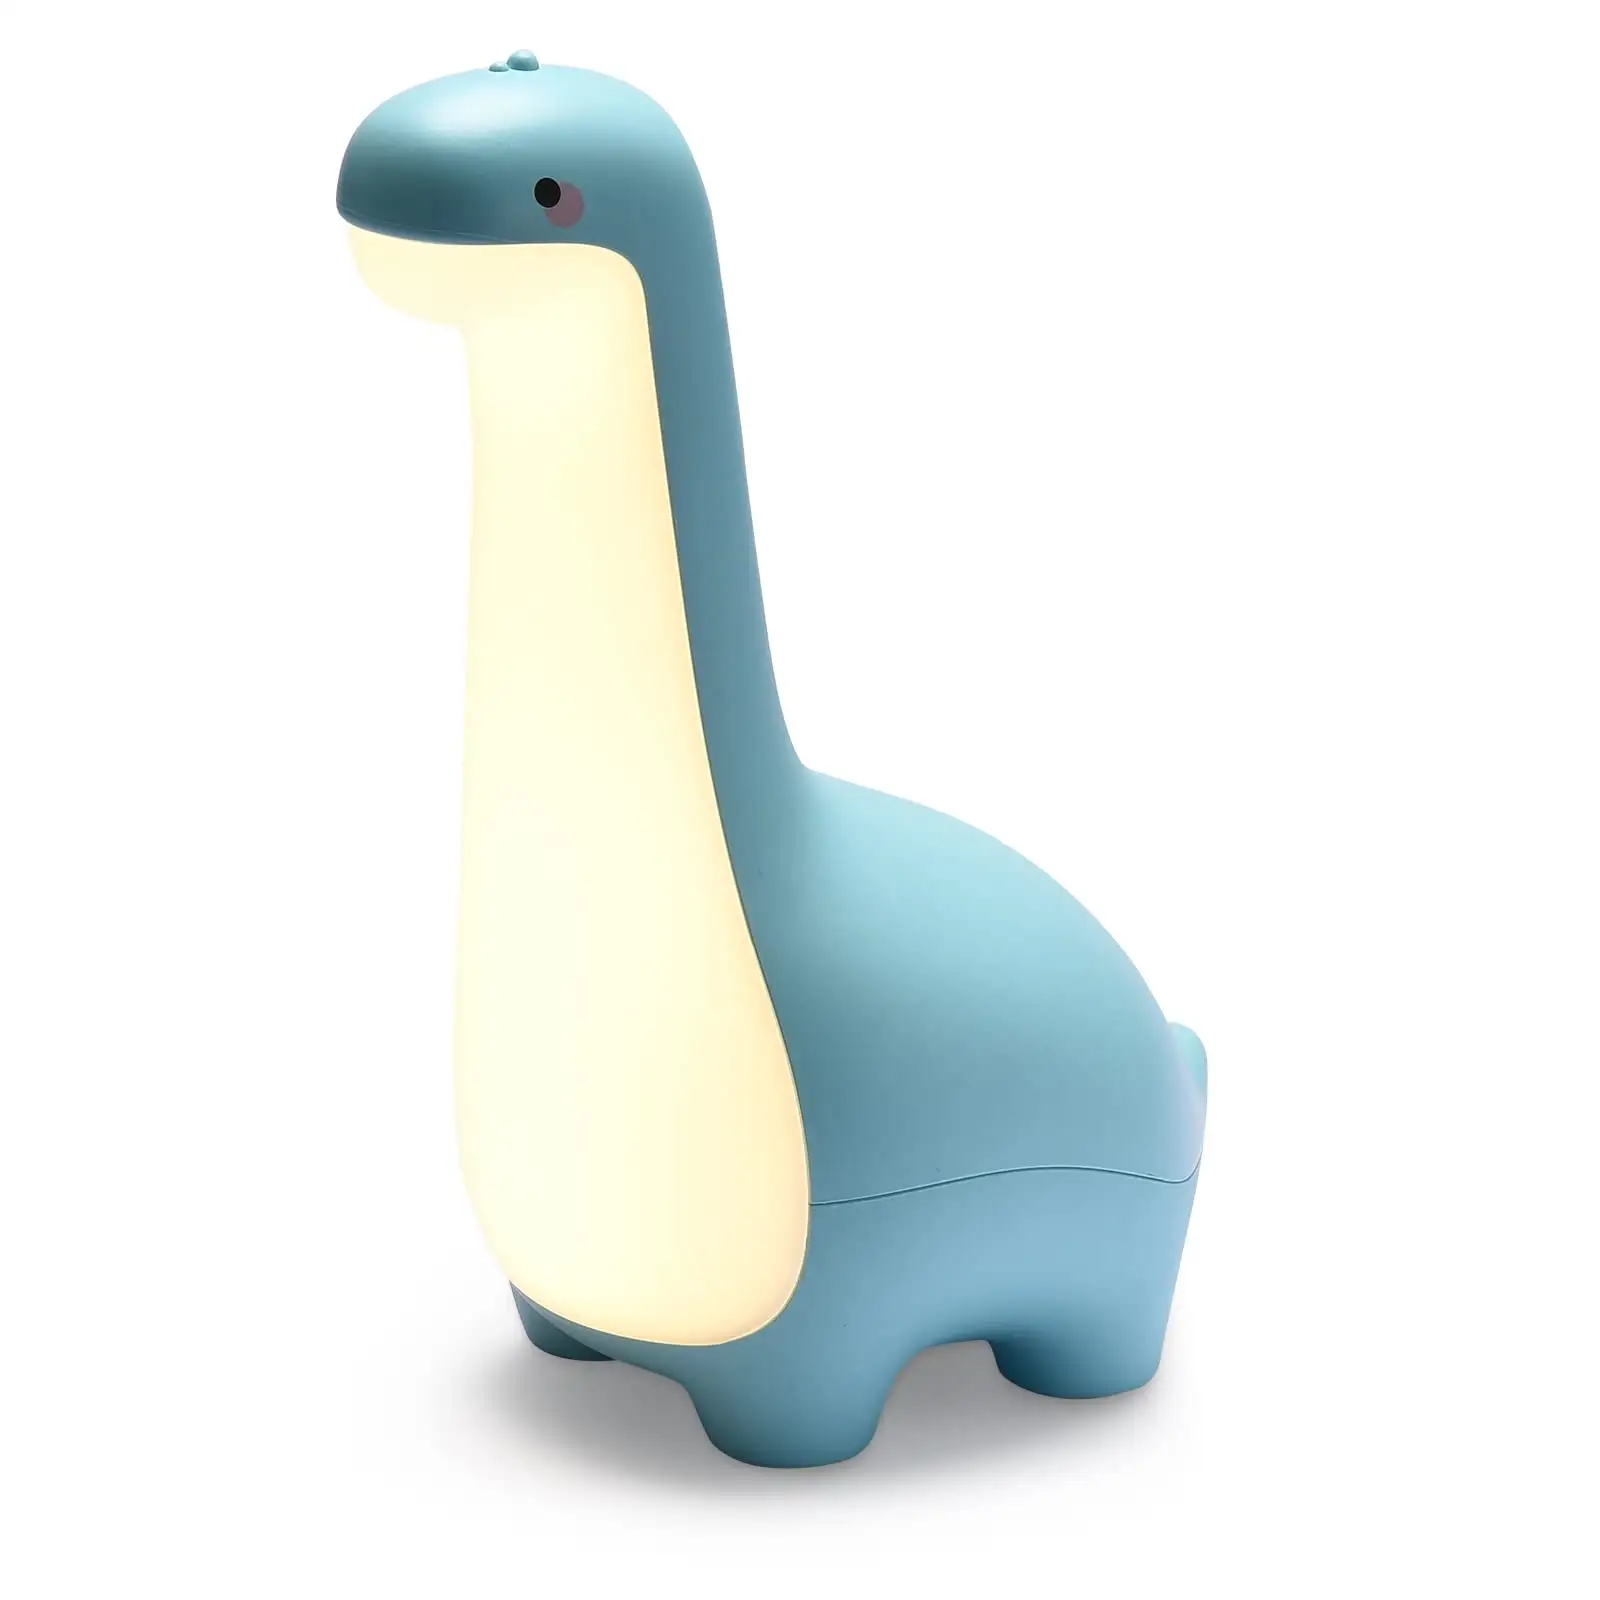 Lindo dinosaurio luz de noche recargable Mini lámpara decoración de habitación portátil cabecera Led iluminación de noche cama luz de noche para niños